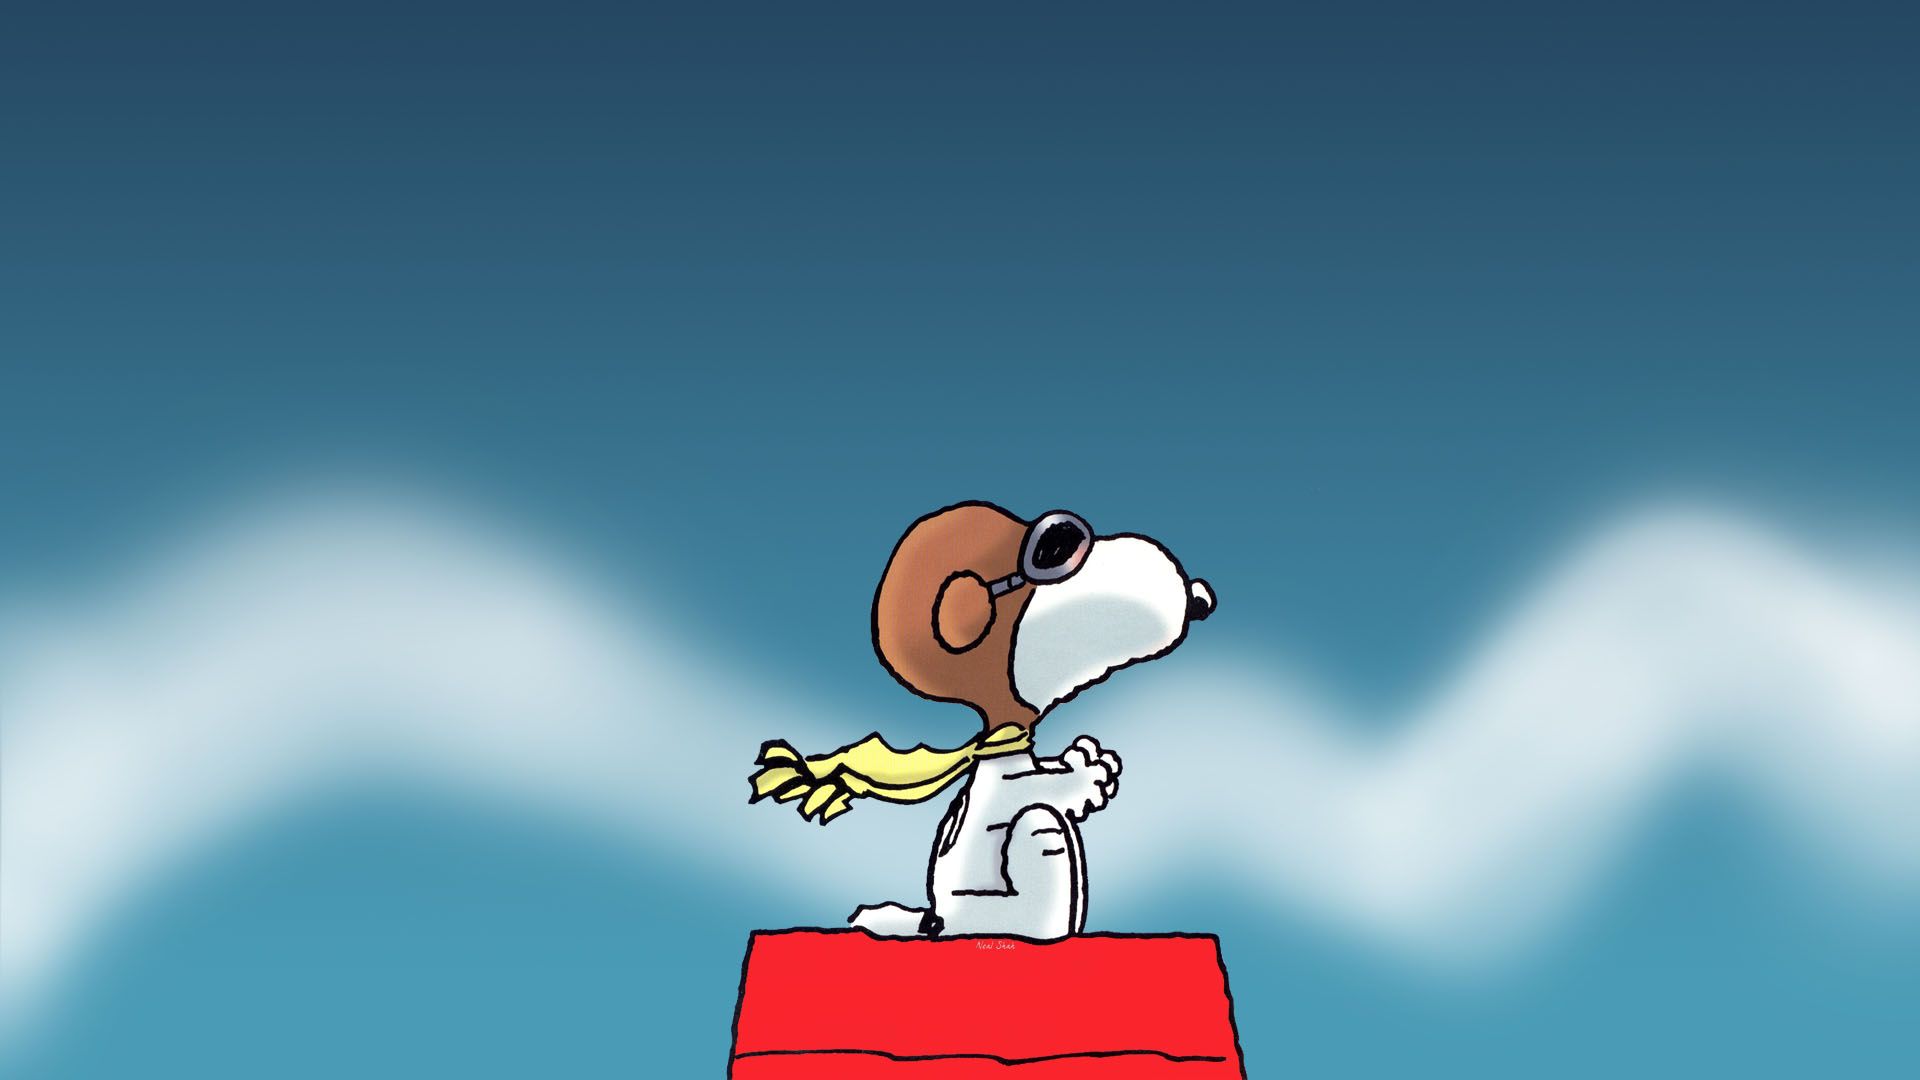 Snoopy wallpaper hd free download